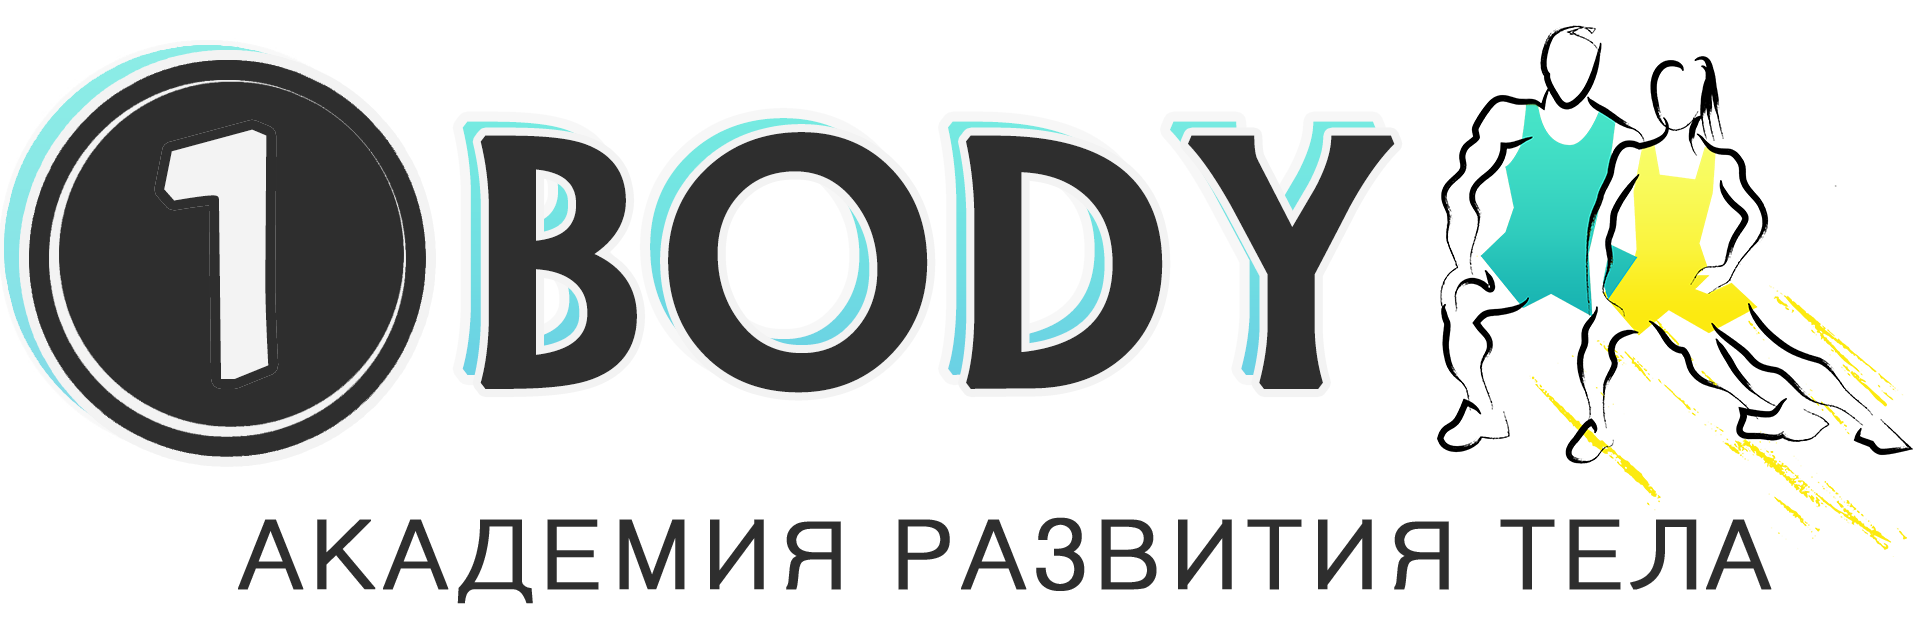 Body develop. Академия #1body: развитие тела. Академия развития человека. Академия развития тела и сознания.. N'obody.